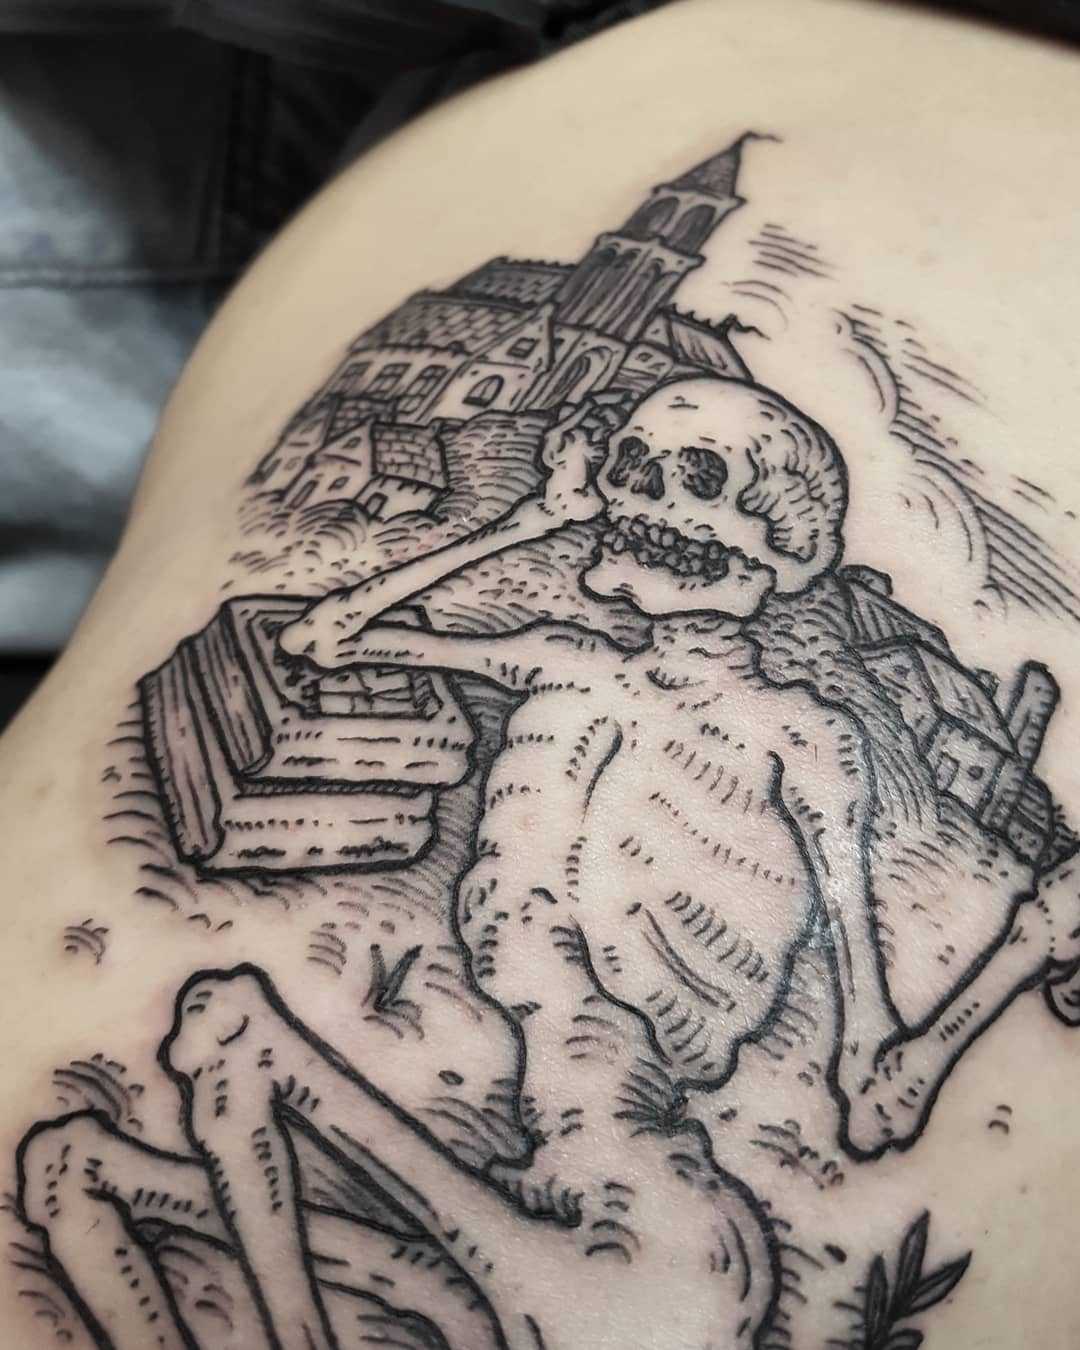 Lazy skeleton tattoo